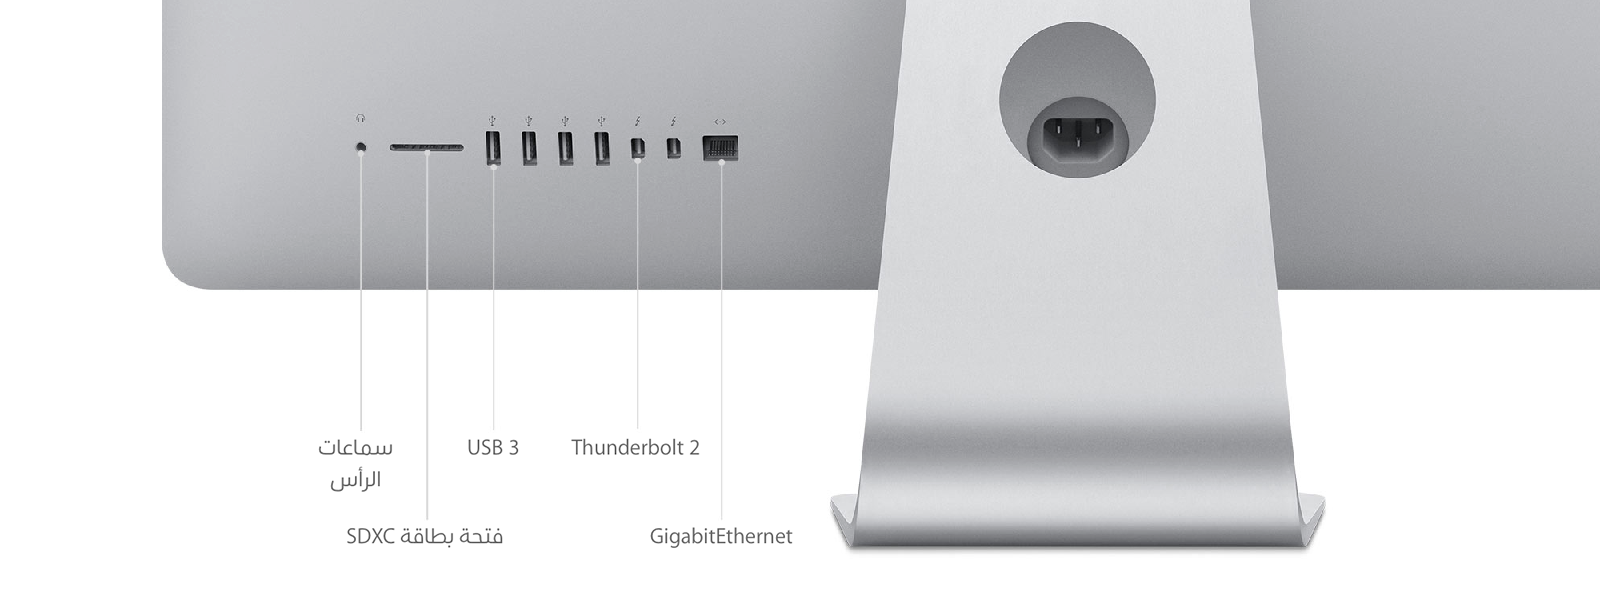 iMac (شاشة Retina 5K، 27 بوصة، أواخر عام 2015) - المواصفات التقنية  (الإمارات)